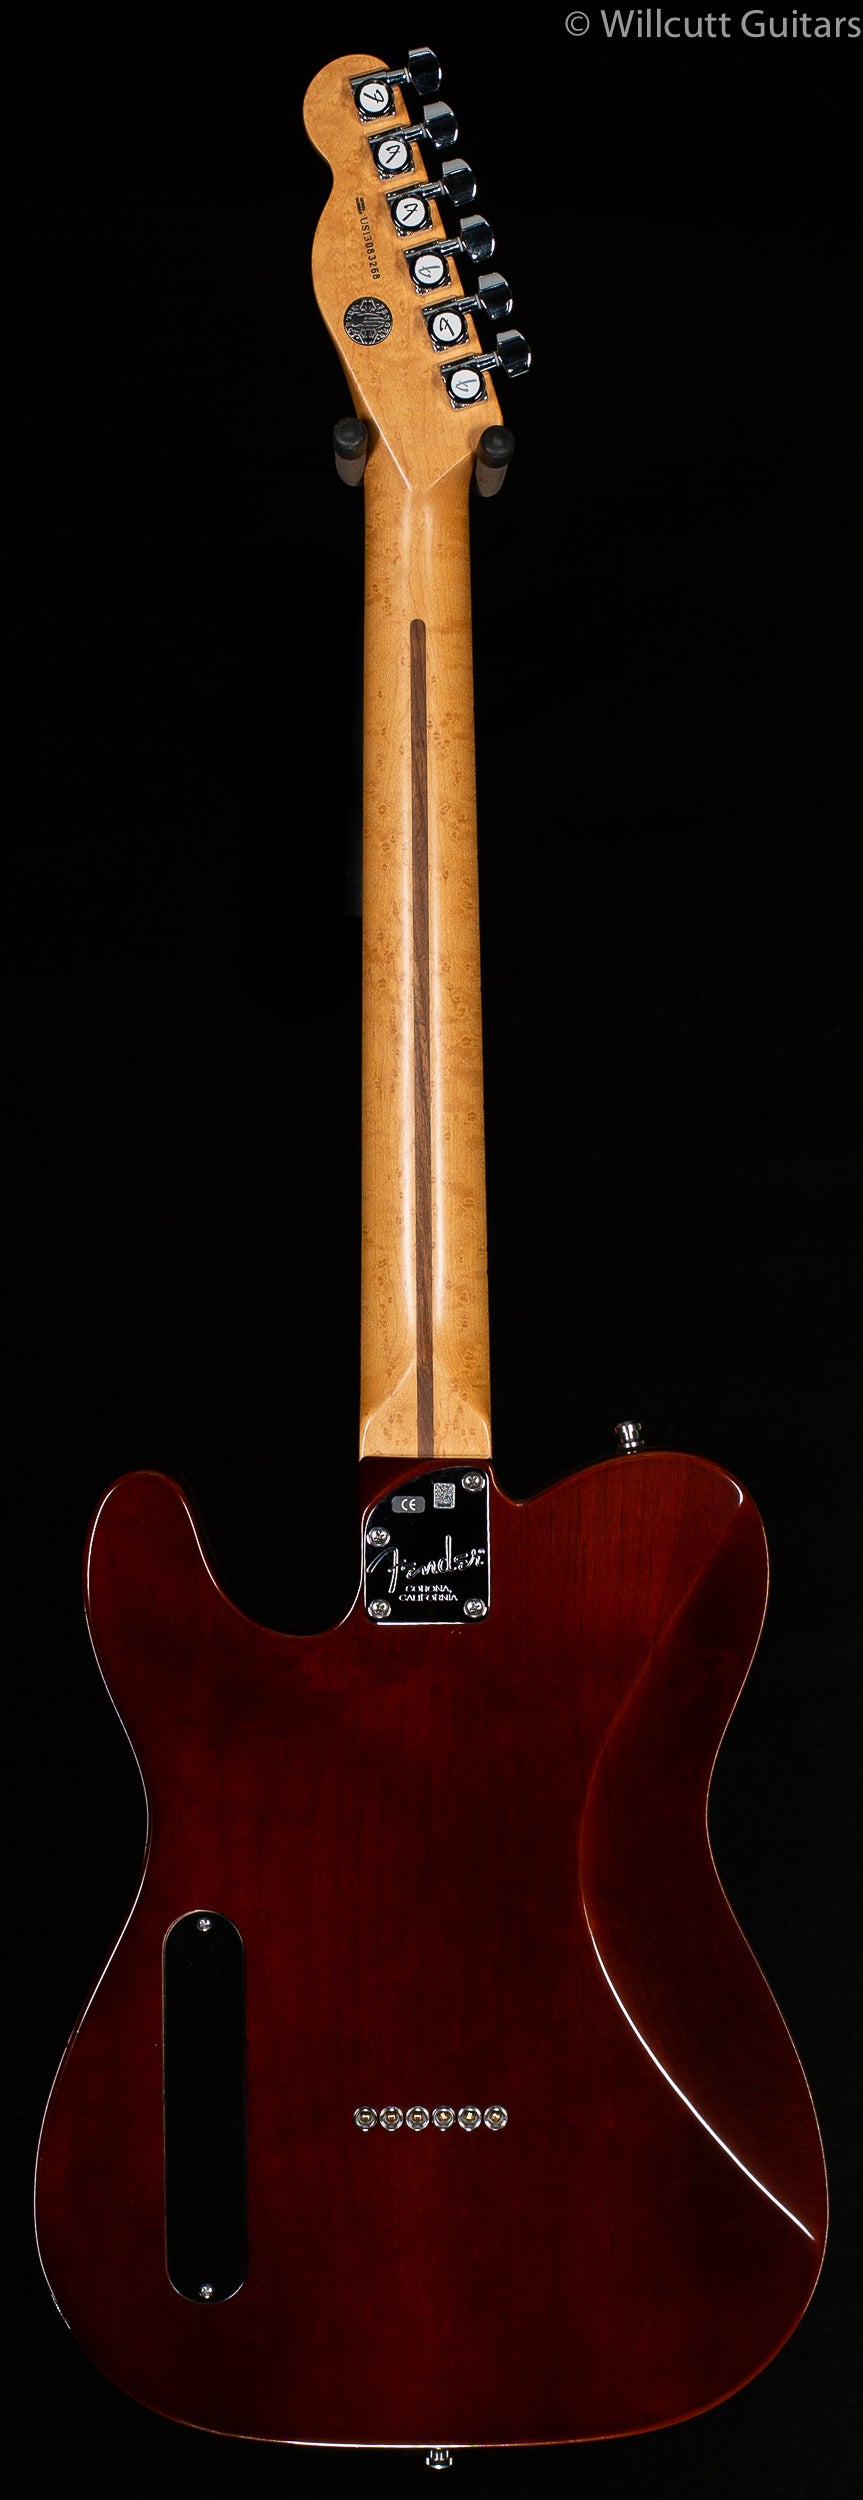 Fender Select Series Telecaster HH - Willcutt Guitars